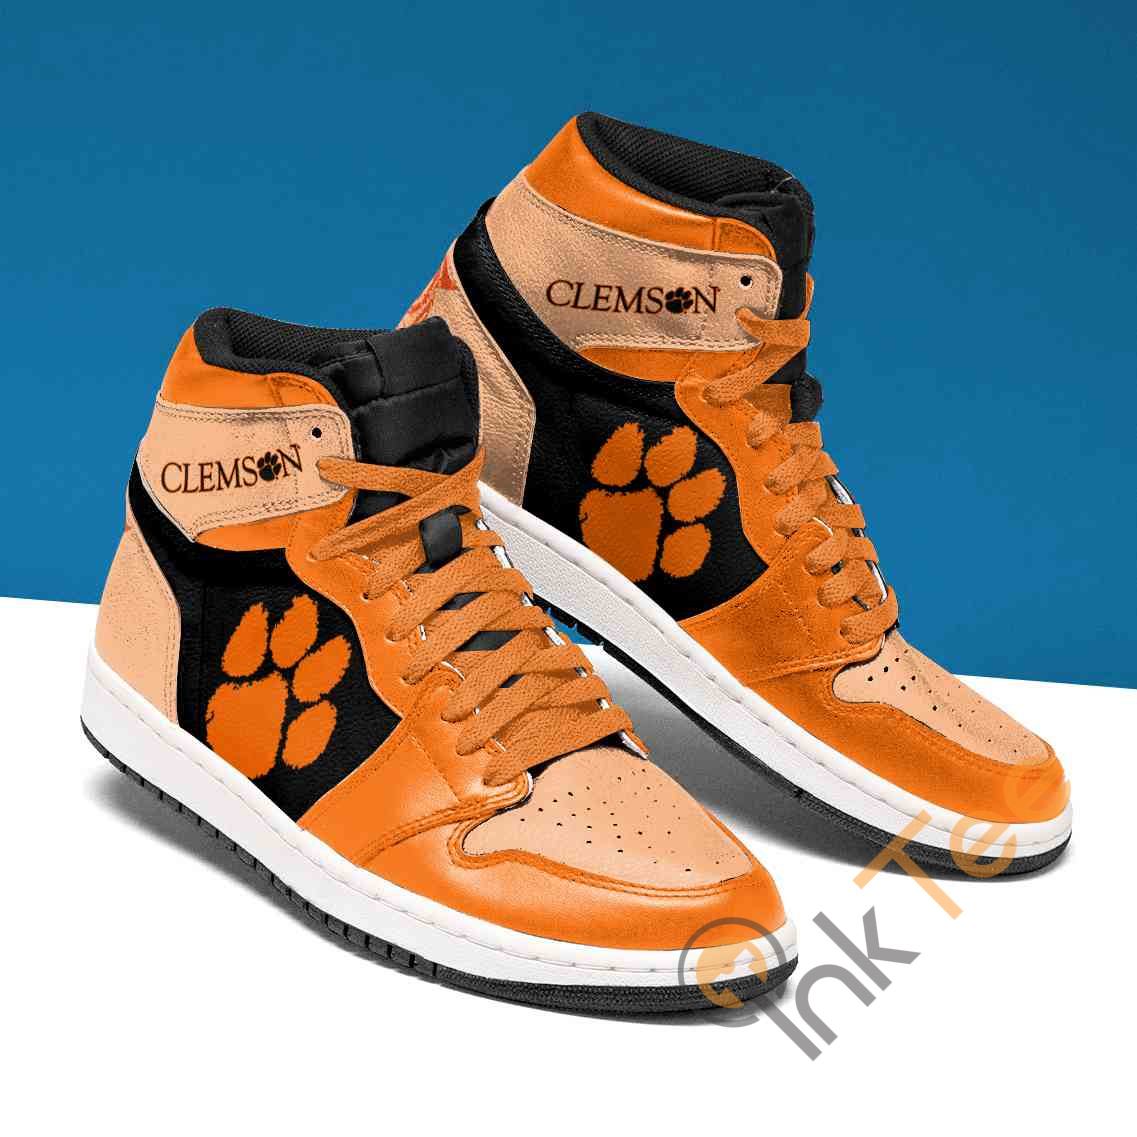 Clemson Tigers Custom Air Jordan Shoes